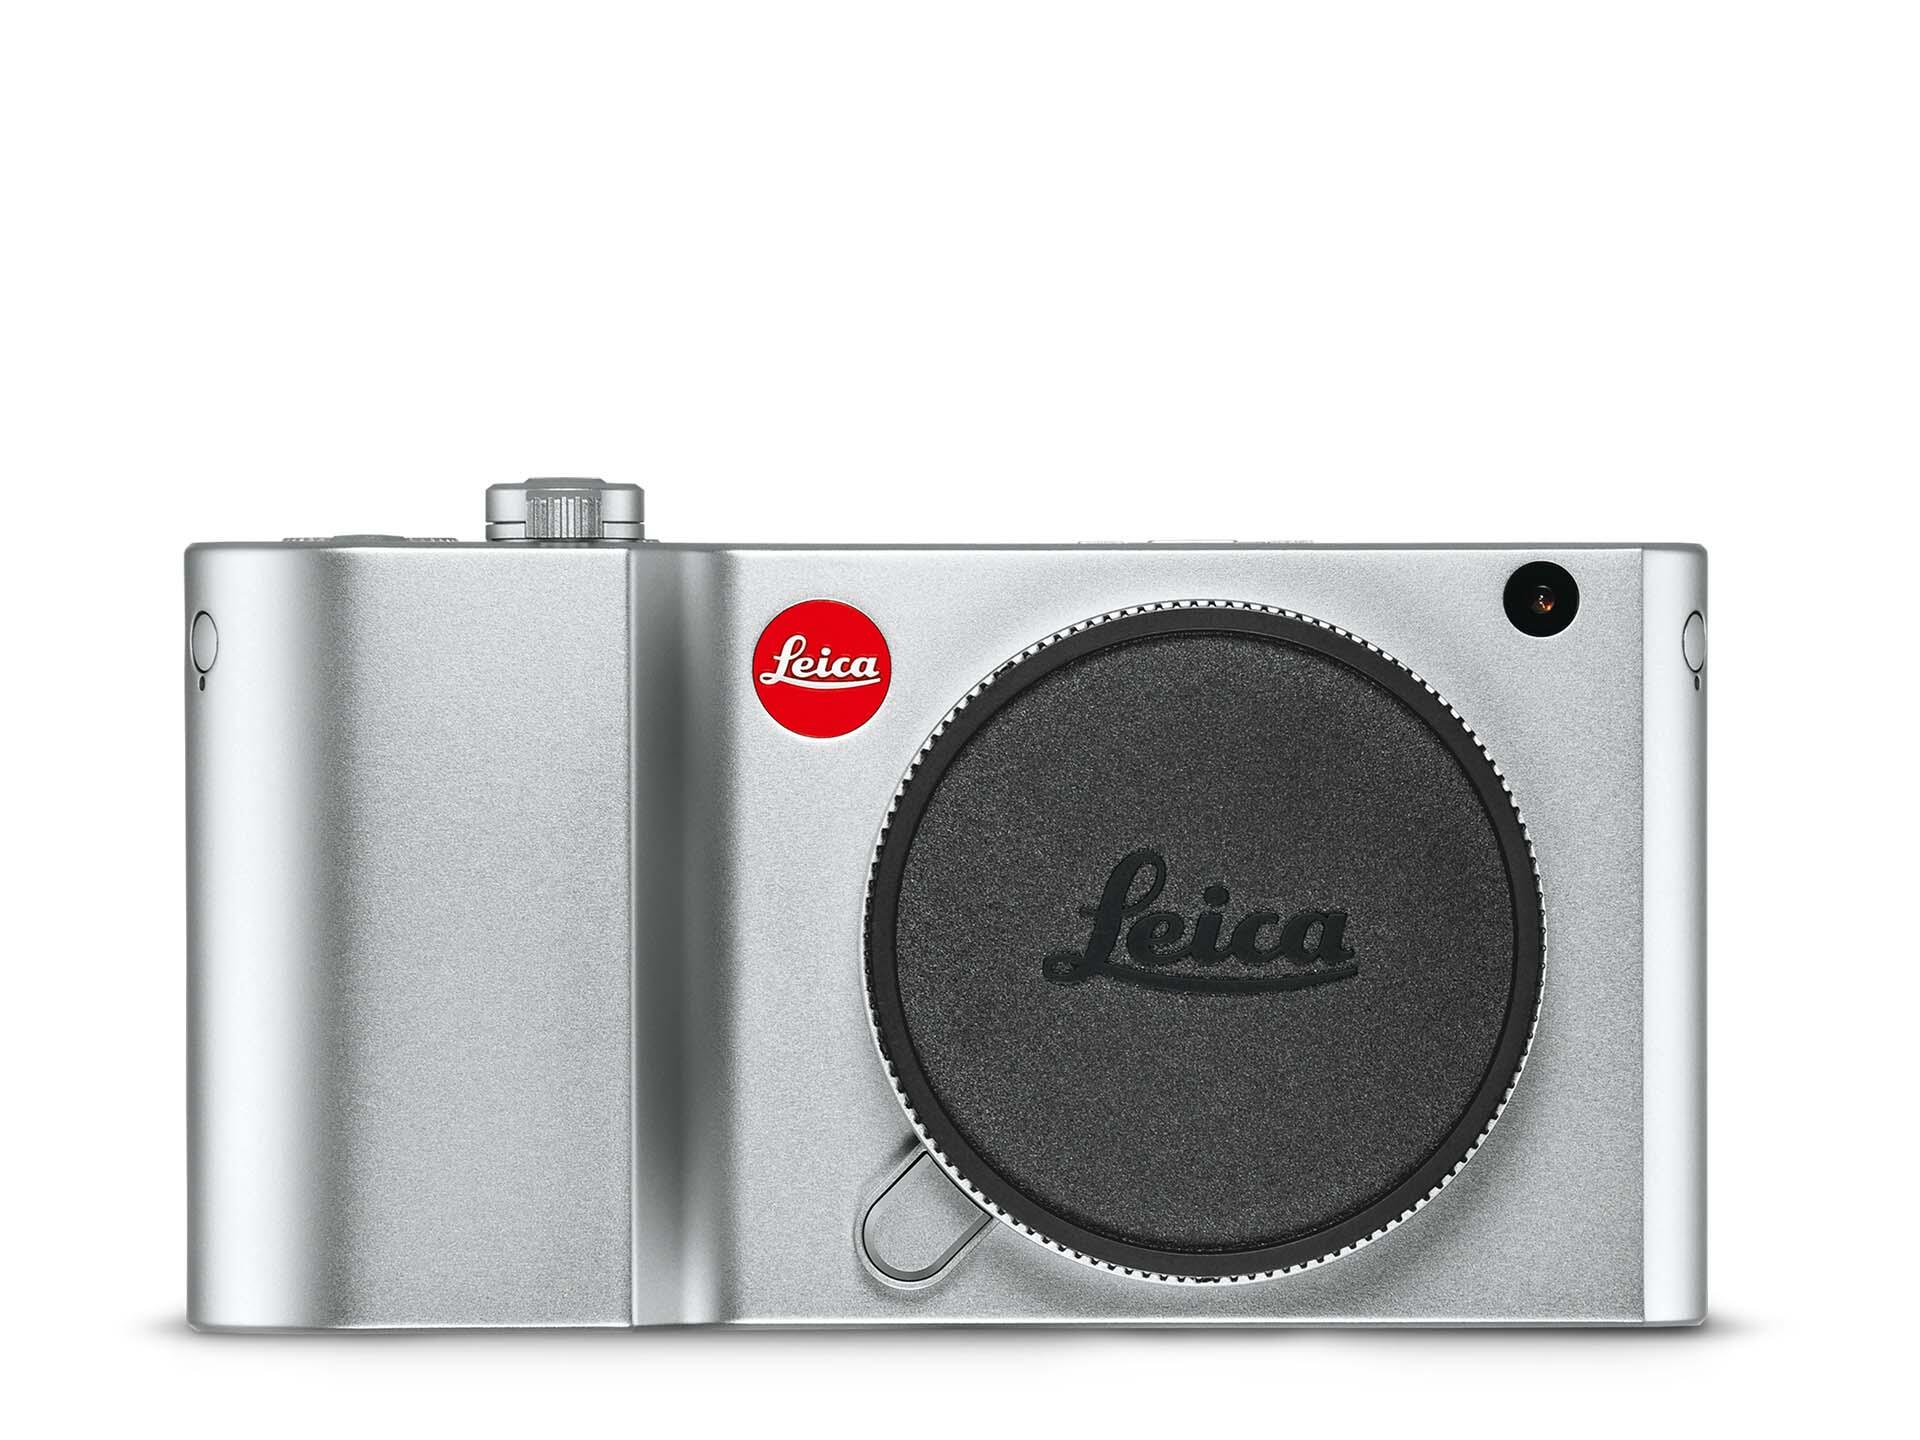 Leica TL2 | Leica Camera US